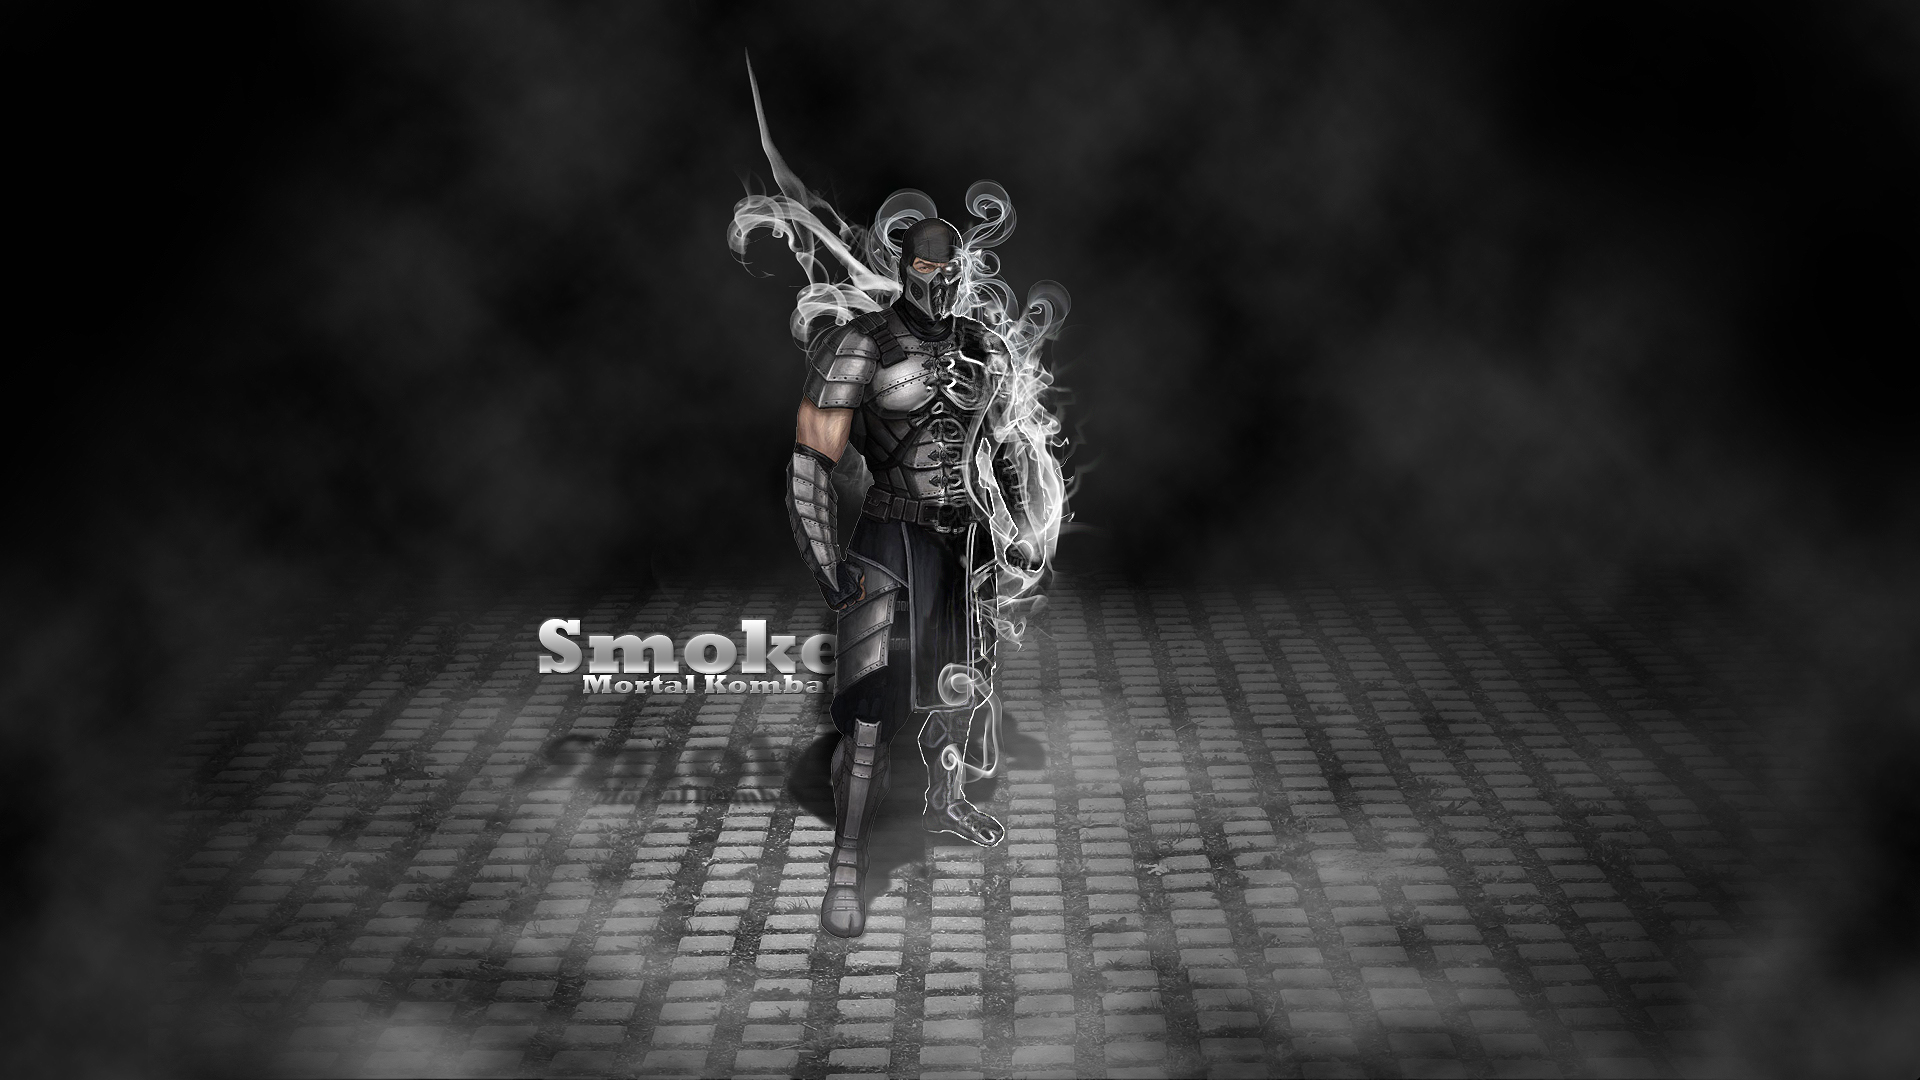 46+ Mortal Kombat X Smoke Wallpaper on WallpaperSafari